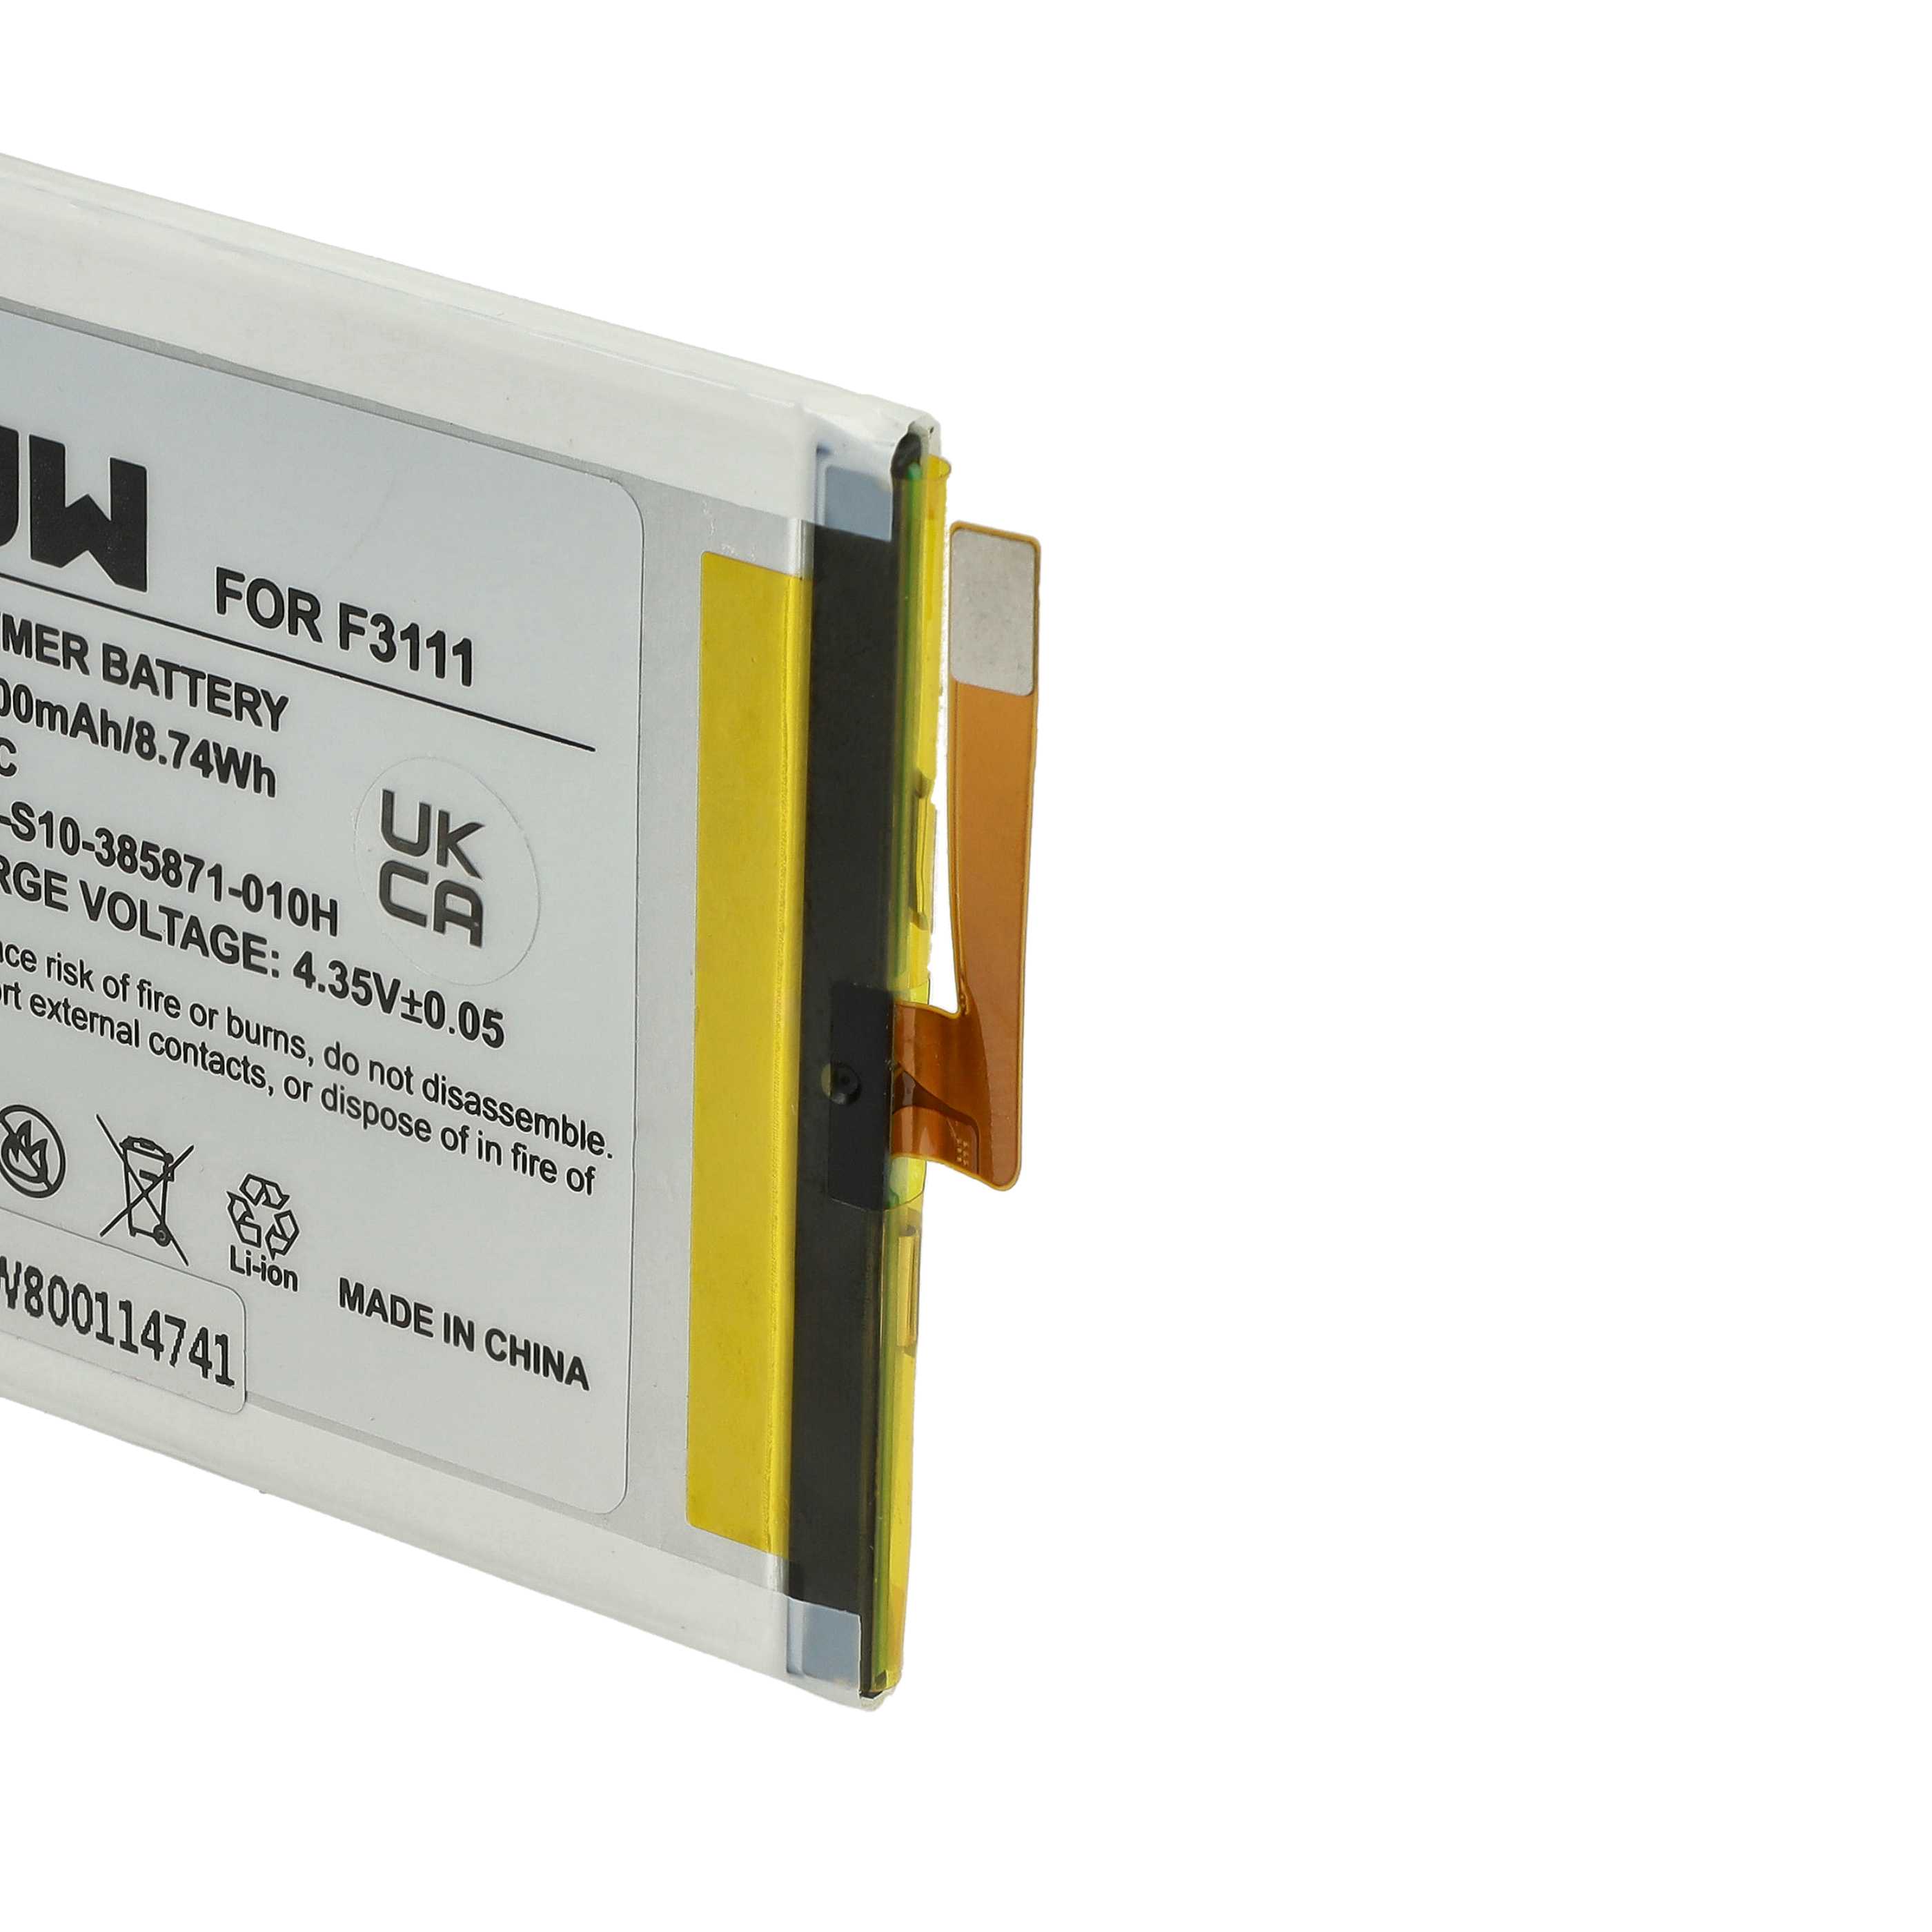 Batteria sostituisce Sony GB-S10-385871-010H per cellulare Sony - 2300mAh 3,8V Li-Poly